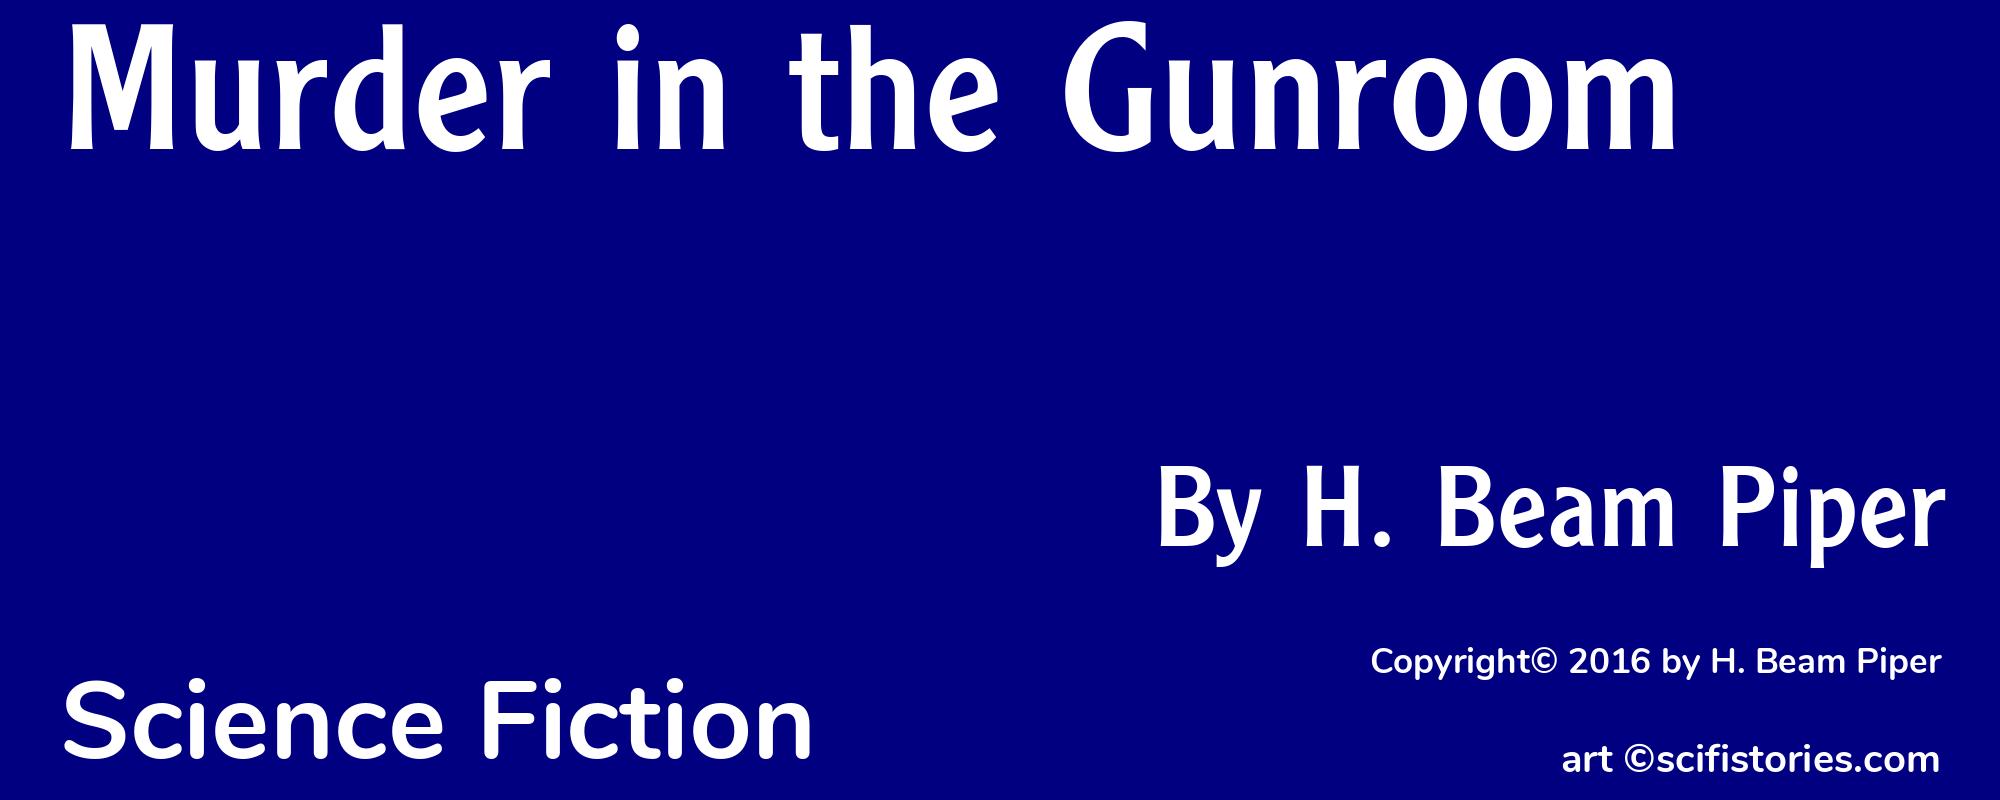 Murder in the Gunroom - Cover